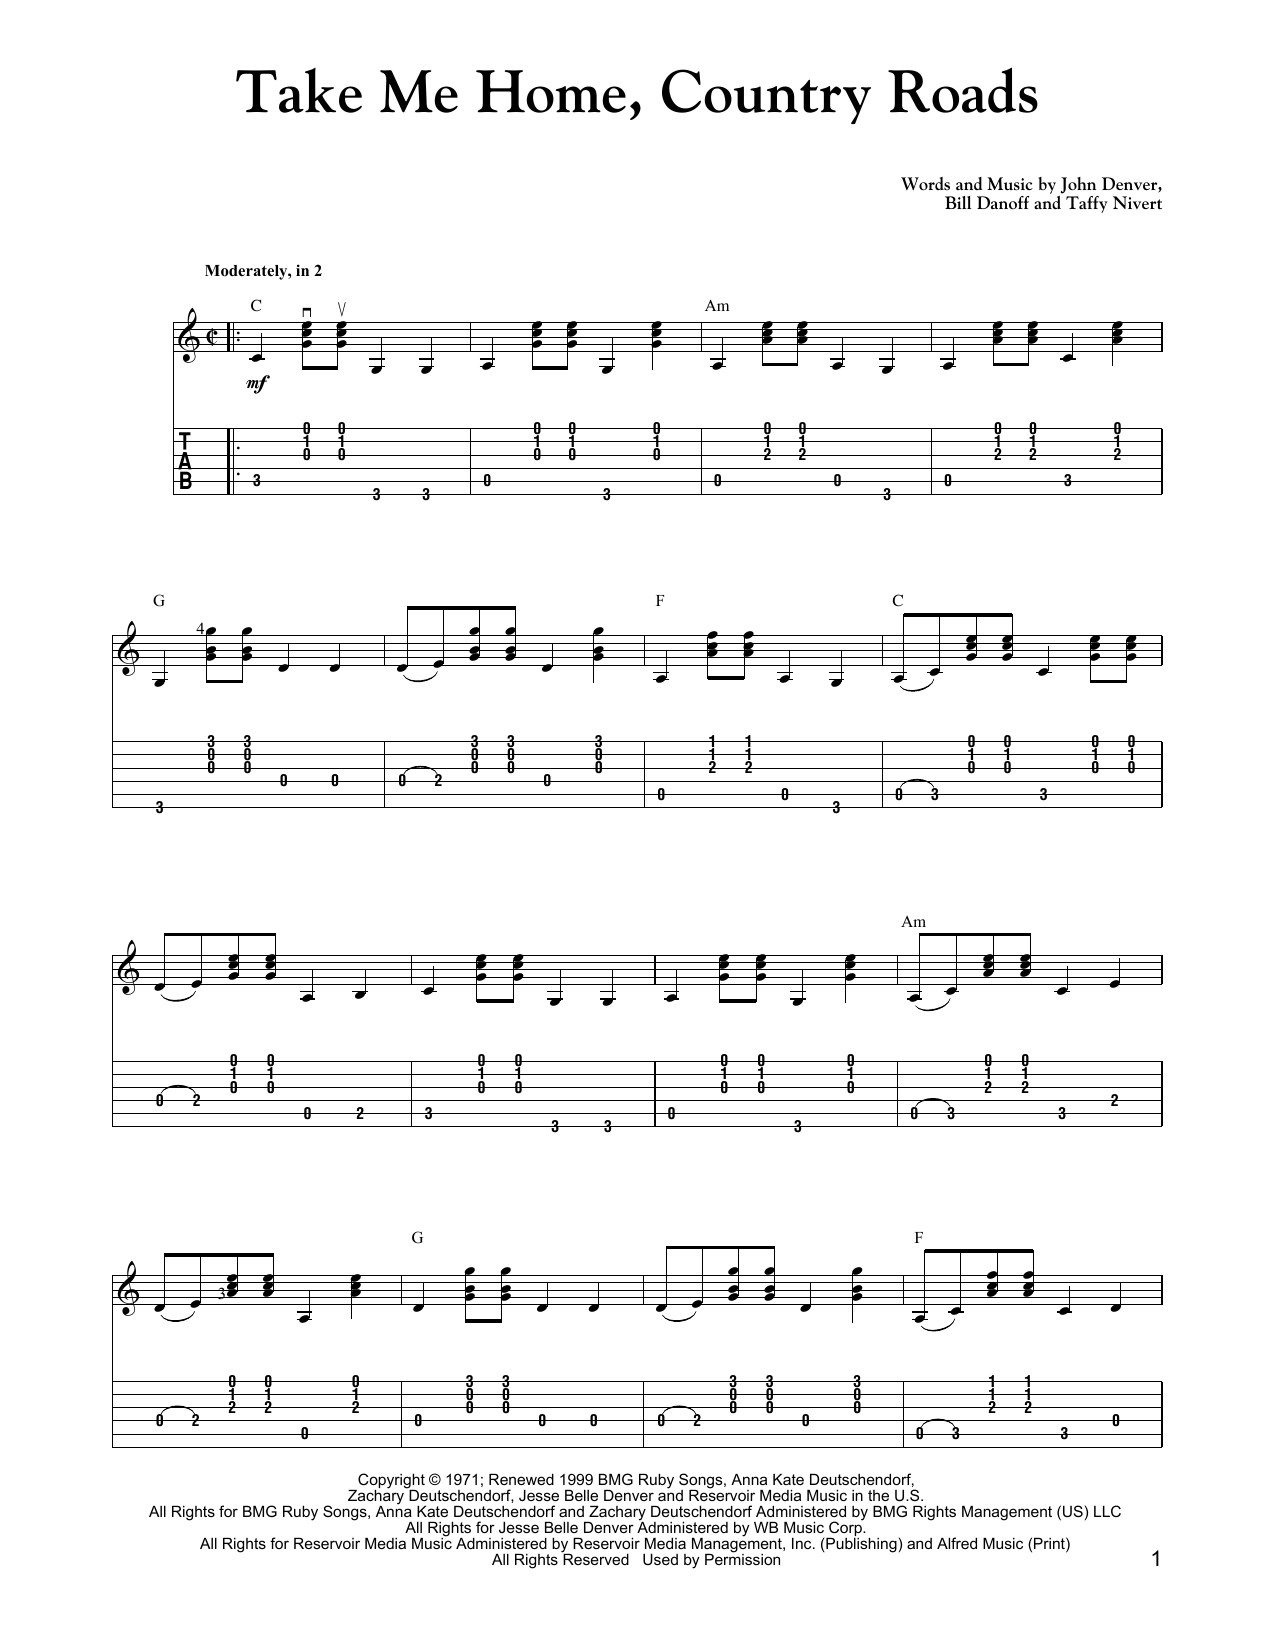 Carter Style Guitar Take Me Home Country Roads Sheet Music Pdf Notes Chords Pop Score Guitar Tab Download Printable Sku 157653